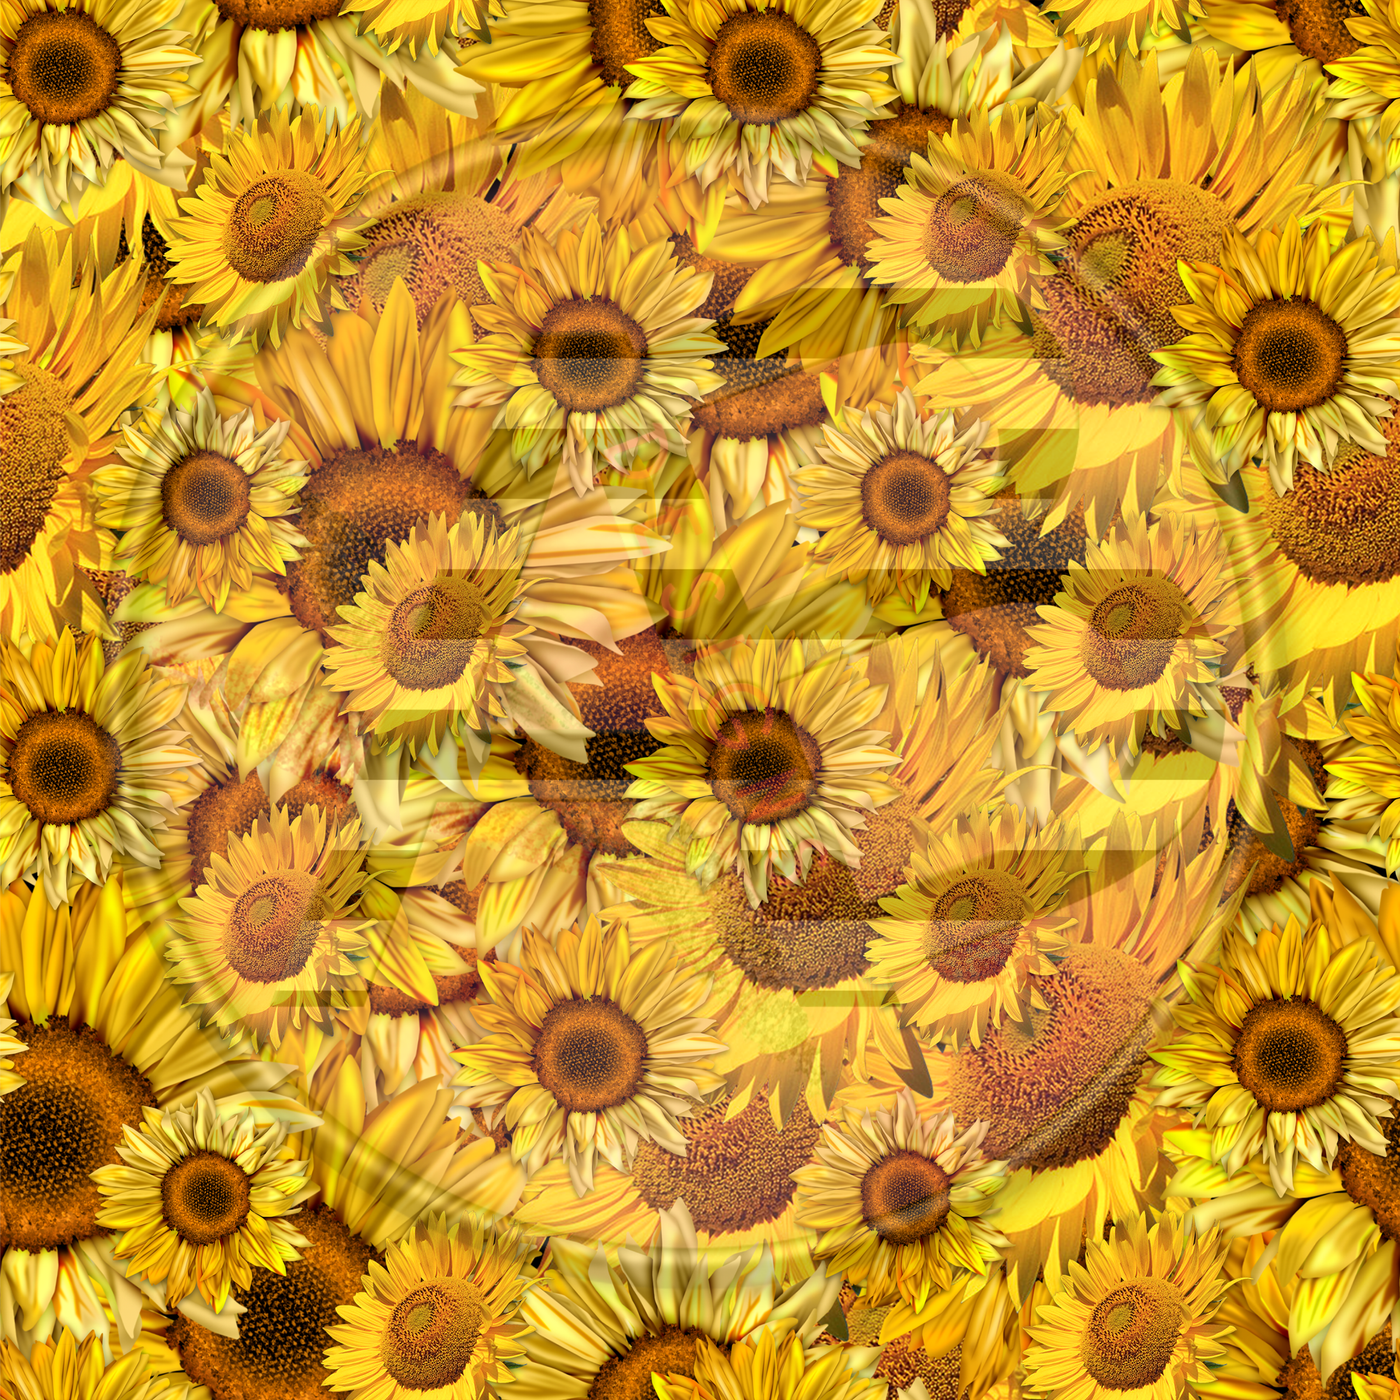 Adhesive Patterned Vinyl - Sunflower 8